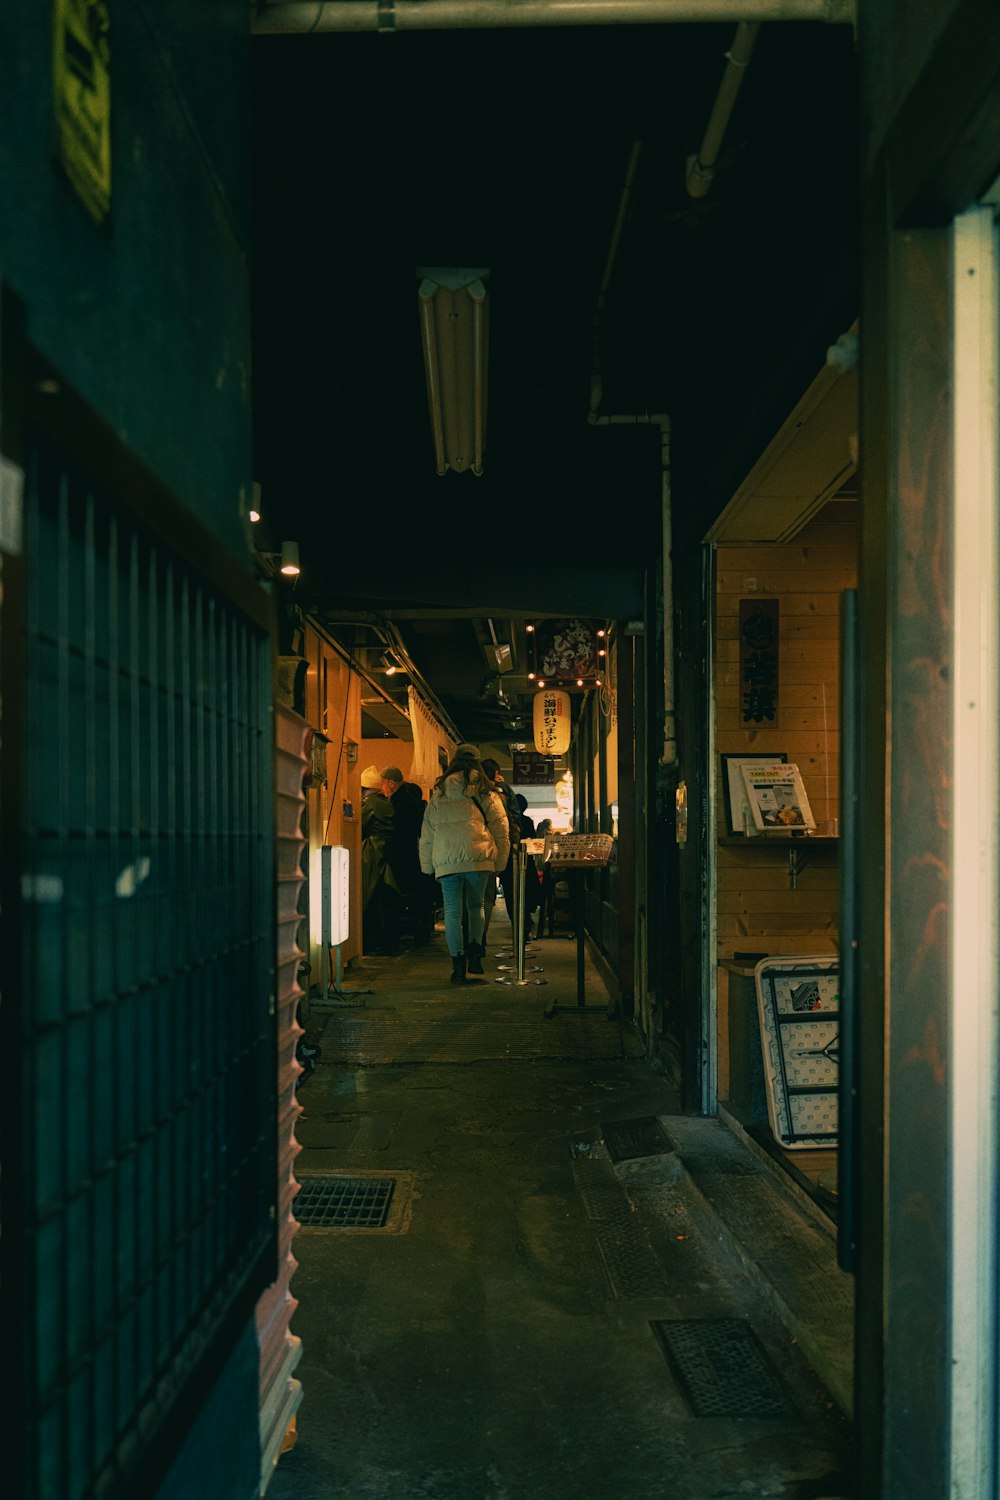 a man is walking down a dark alley way